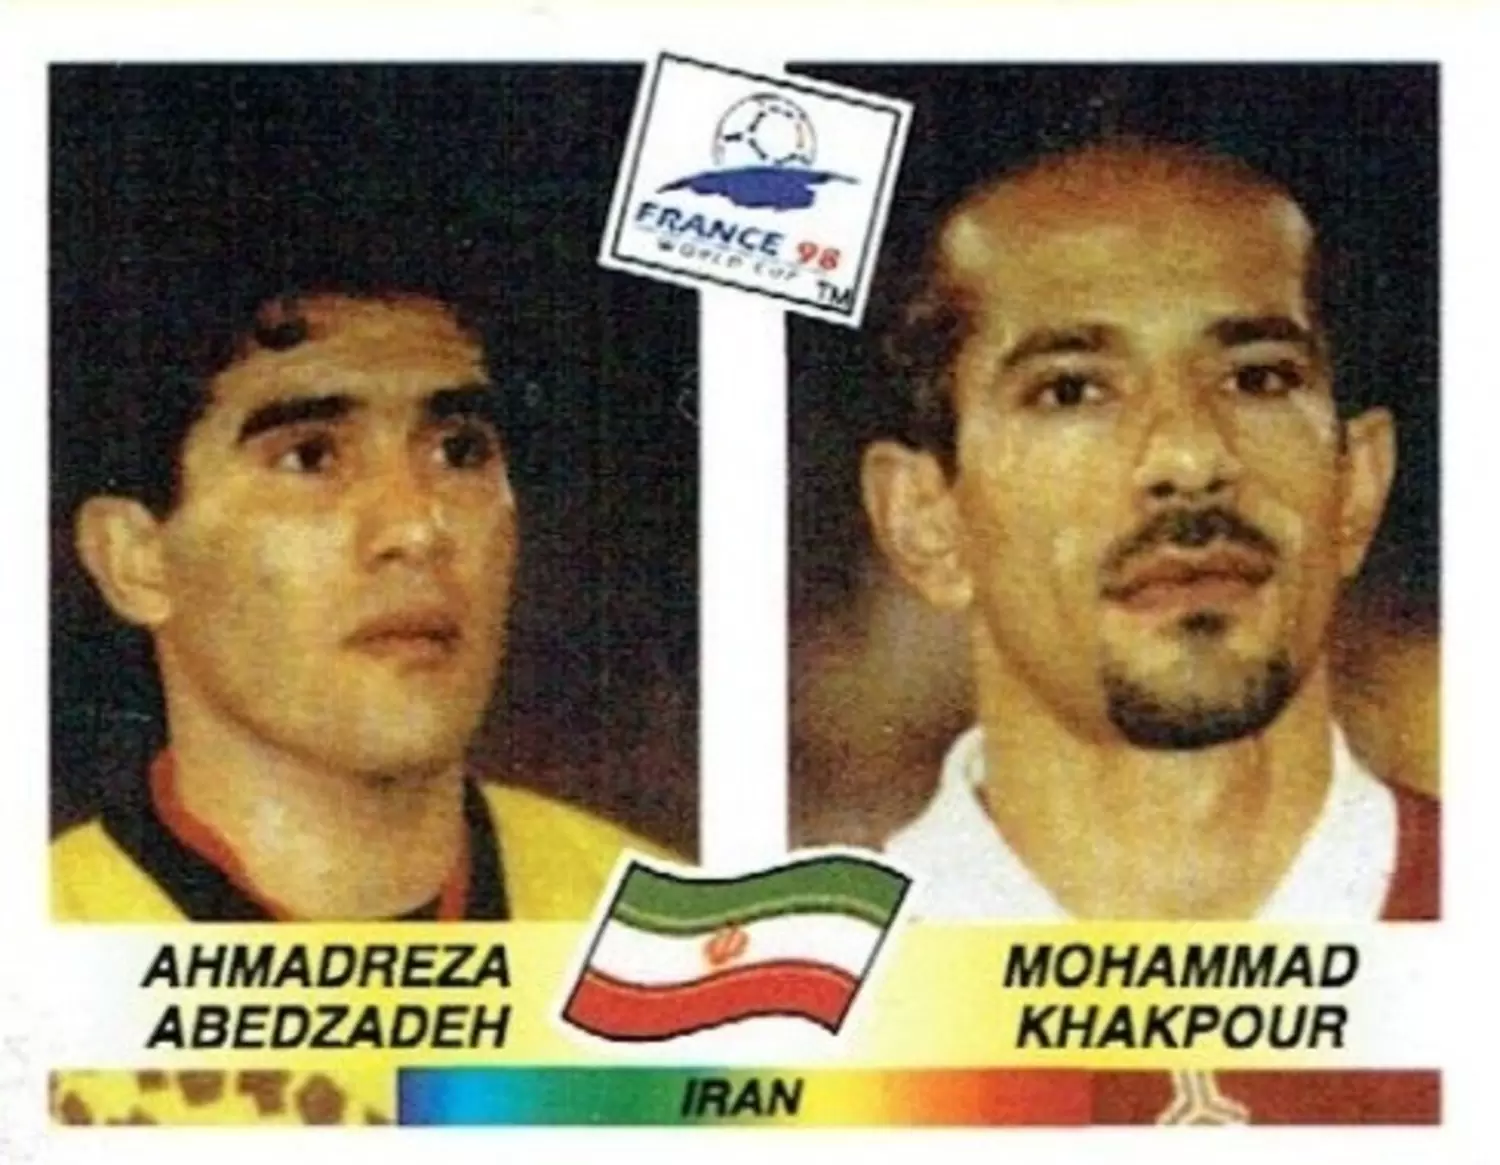 France 98 - Ahmadreza Abedzadeh / Mohammad Khakpour - IRN